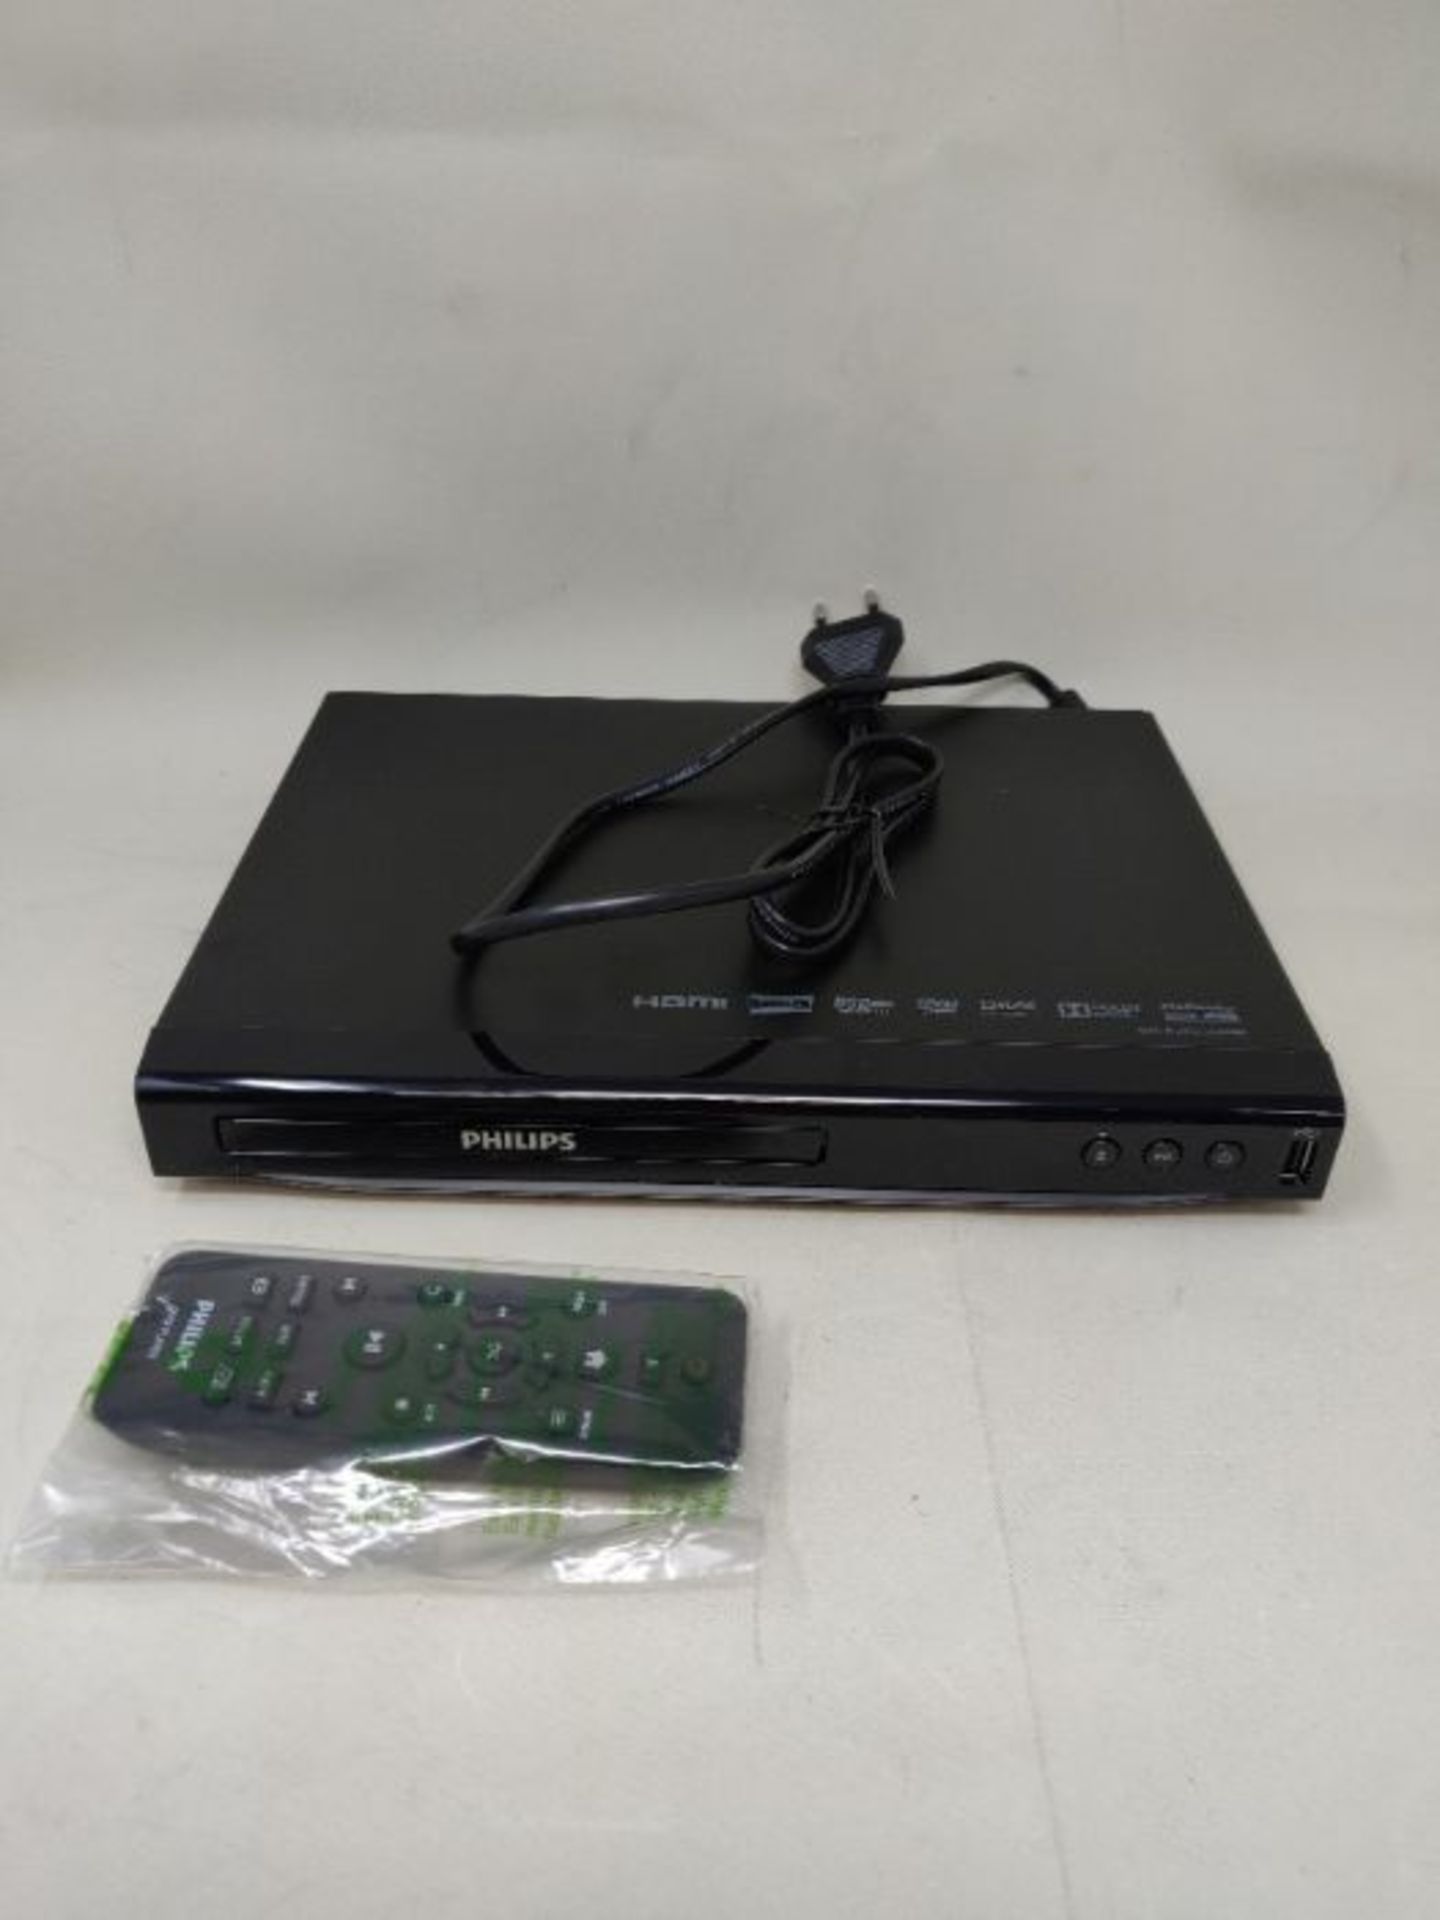 Philips DVD player DVP2880 HDMI 1080p USB 2.0 DivX Ultra CinemaPlus - Image 3 of 3